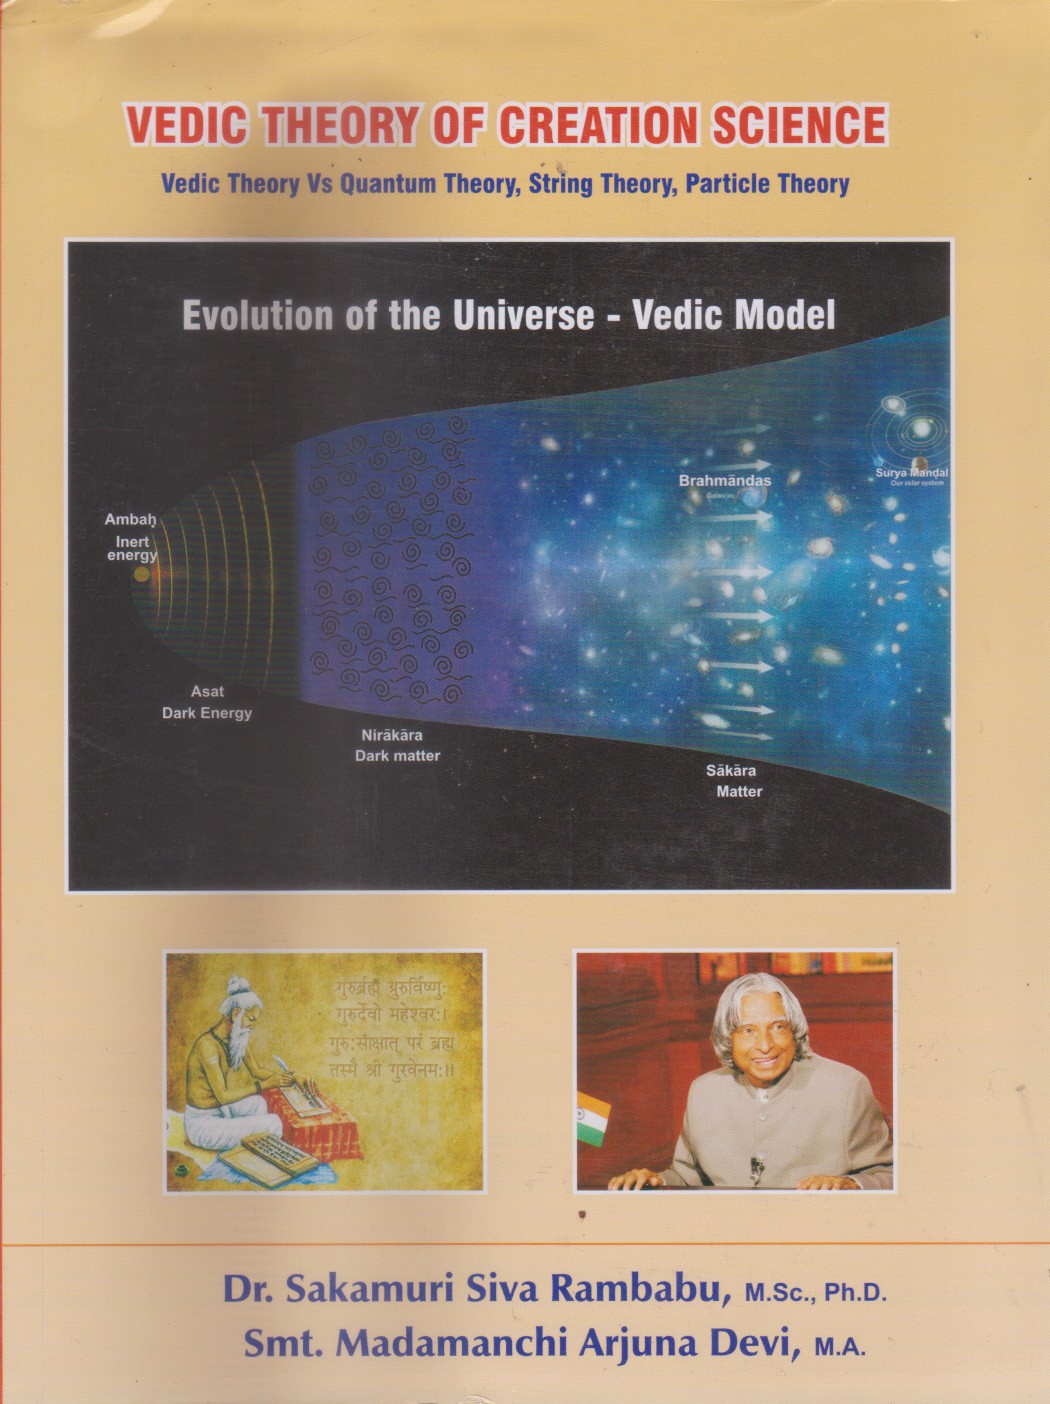 vedic-theory-of-creation-science-english-book-by-drsakamuri-siva-rambabu-smt-madamanchi-arjuna-devi